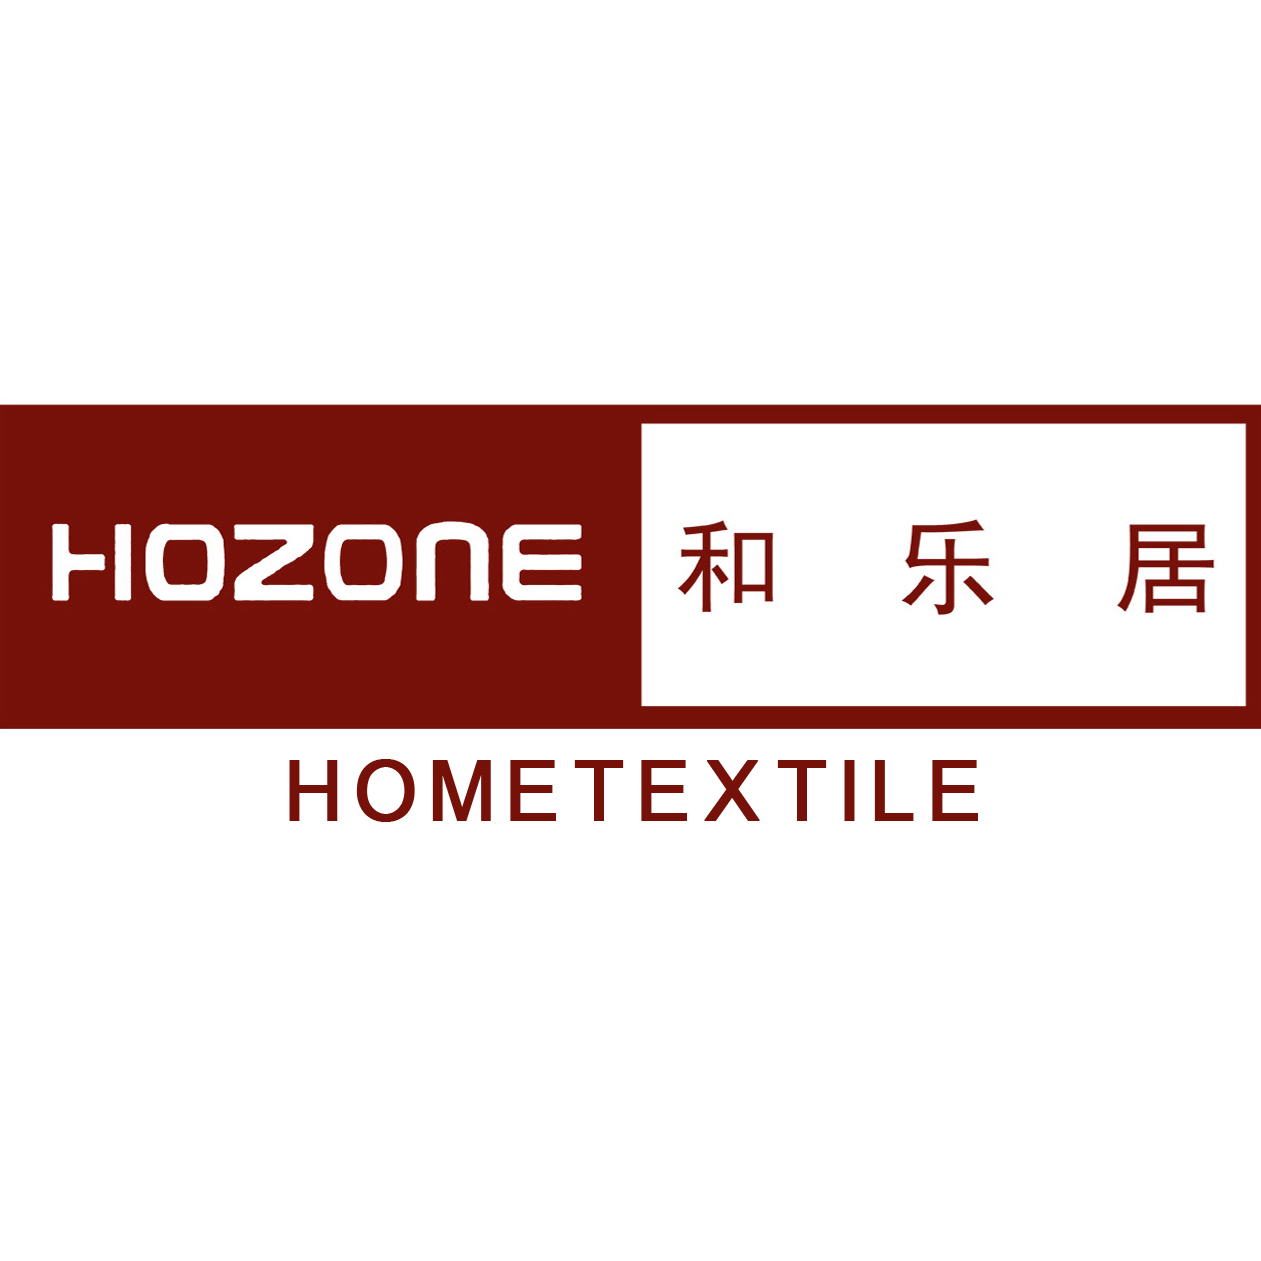 Hozone Hometextile Co., Ltd